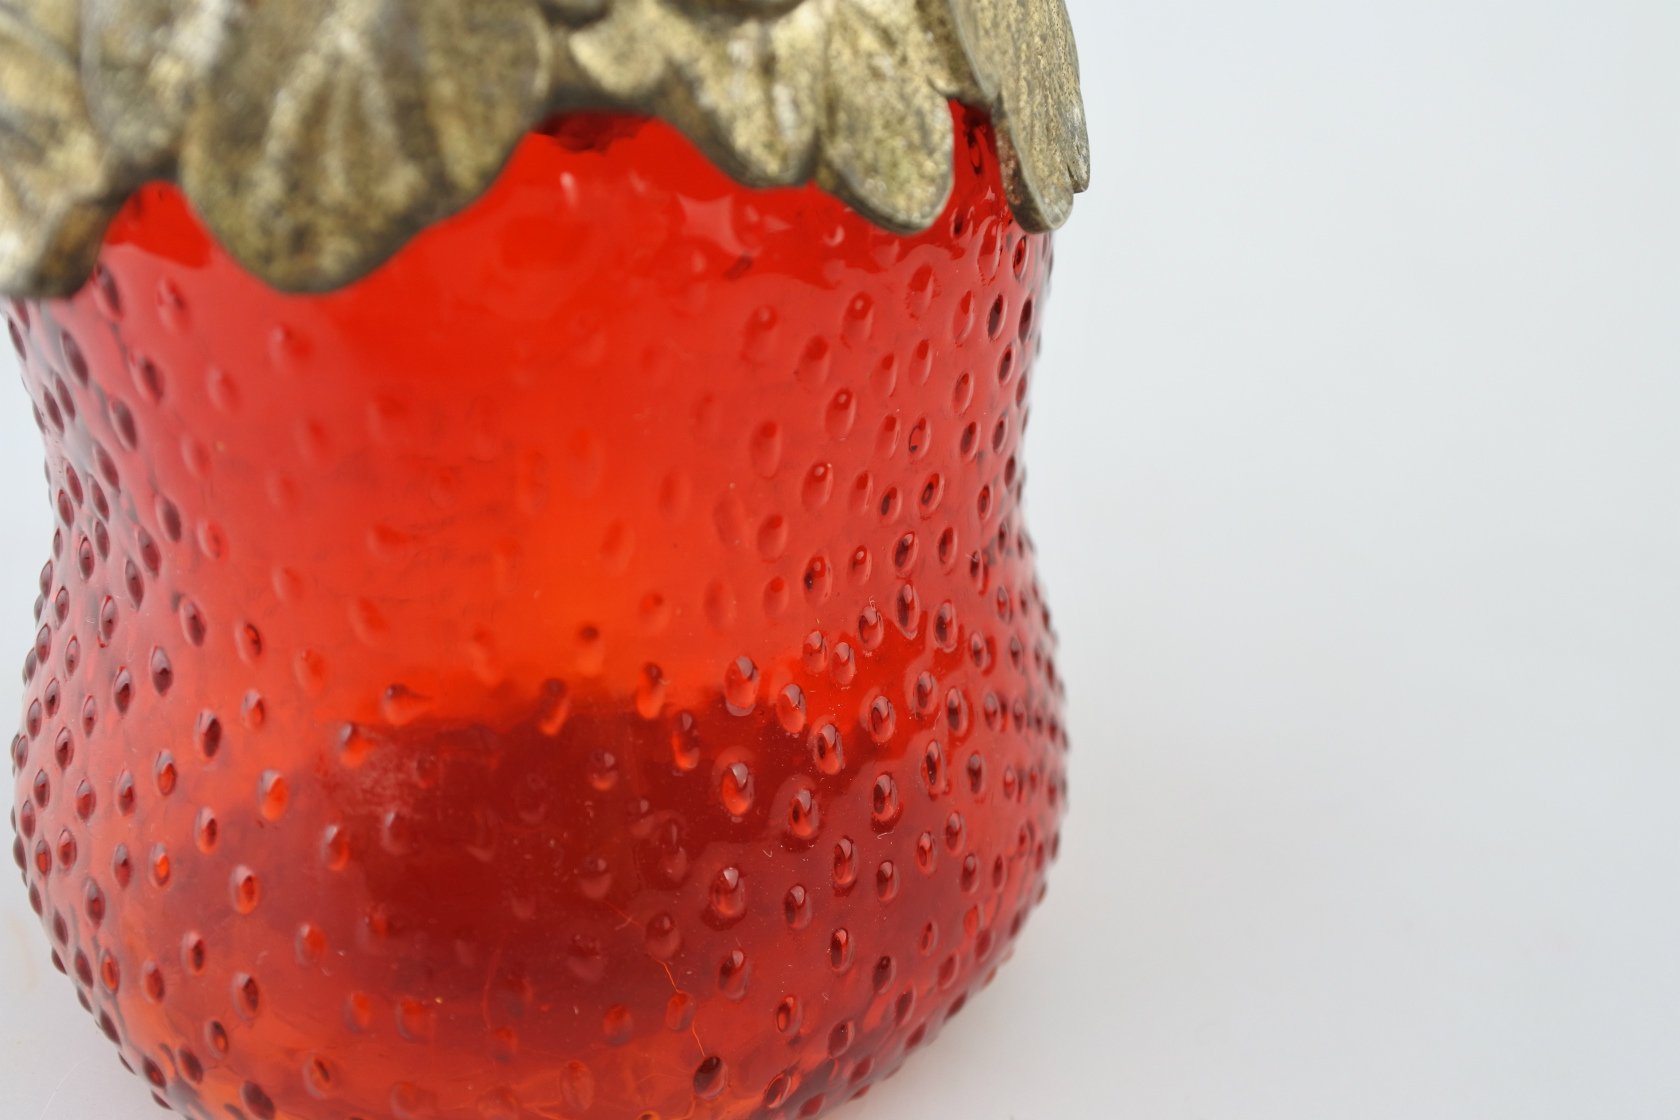 vi-strawberry-glass-sugarpot